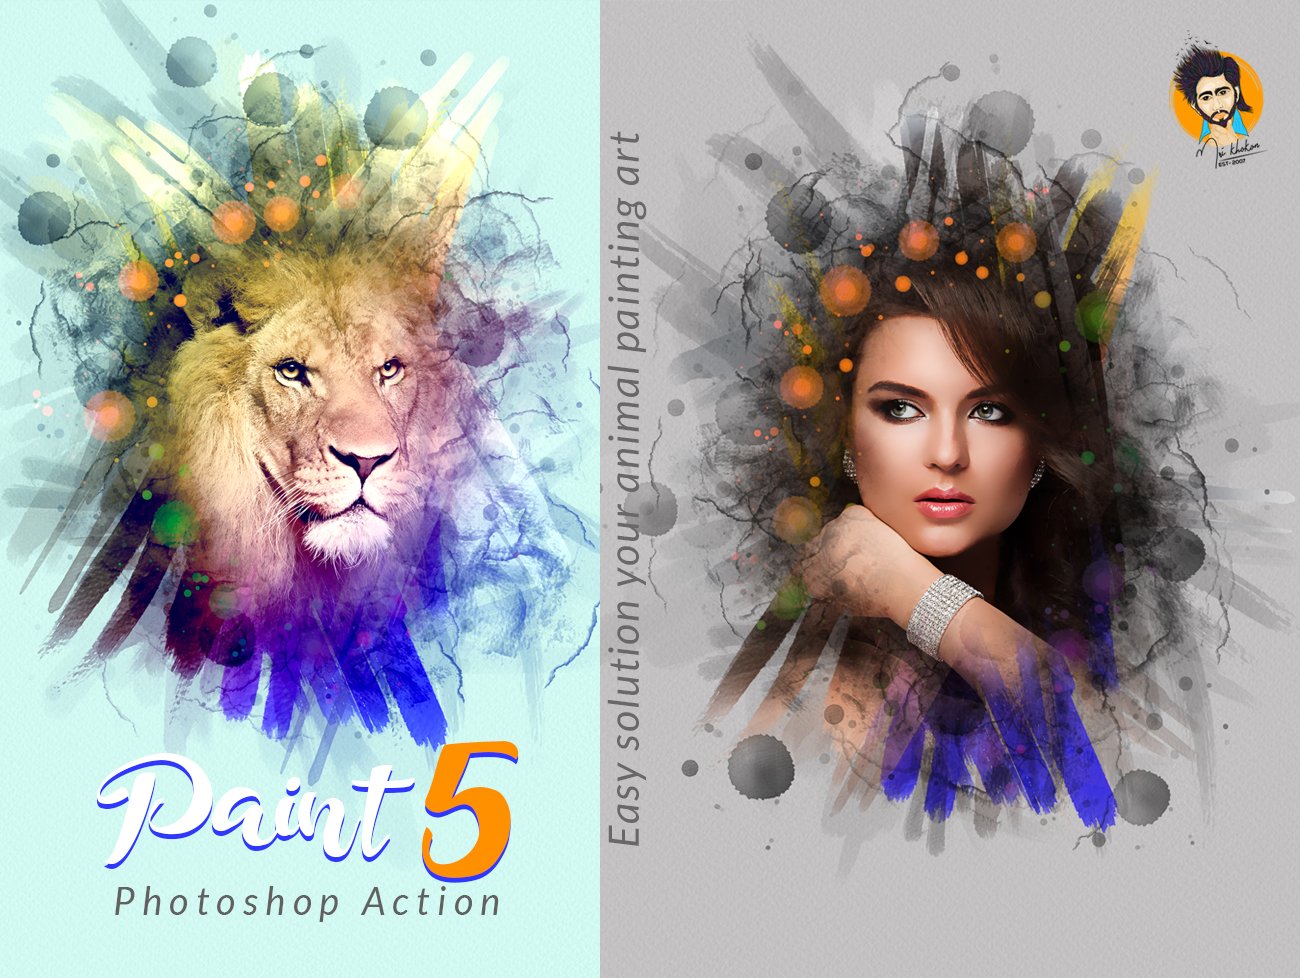 Paint Photoshop Action 5cover image.